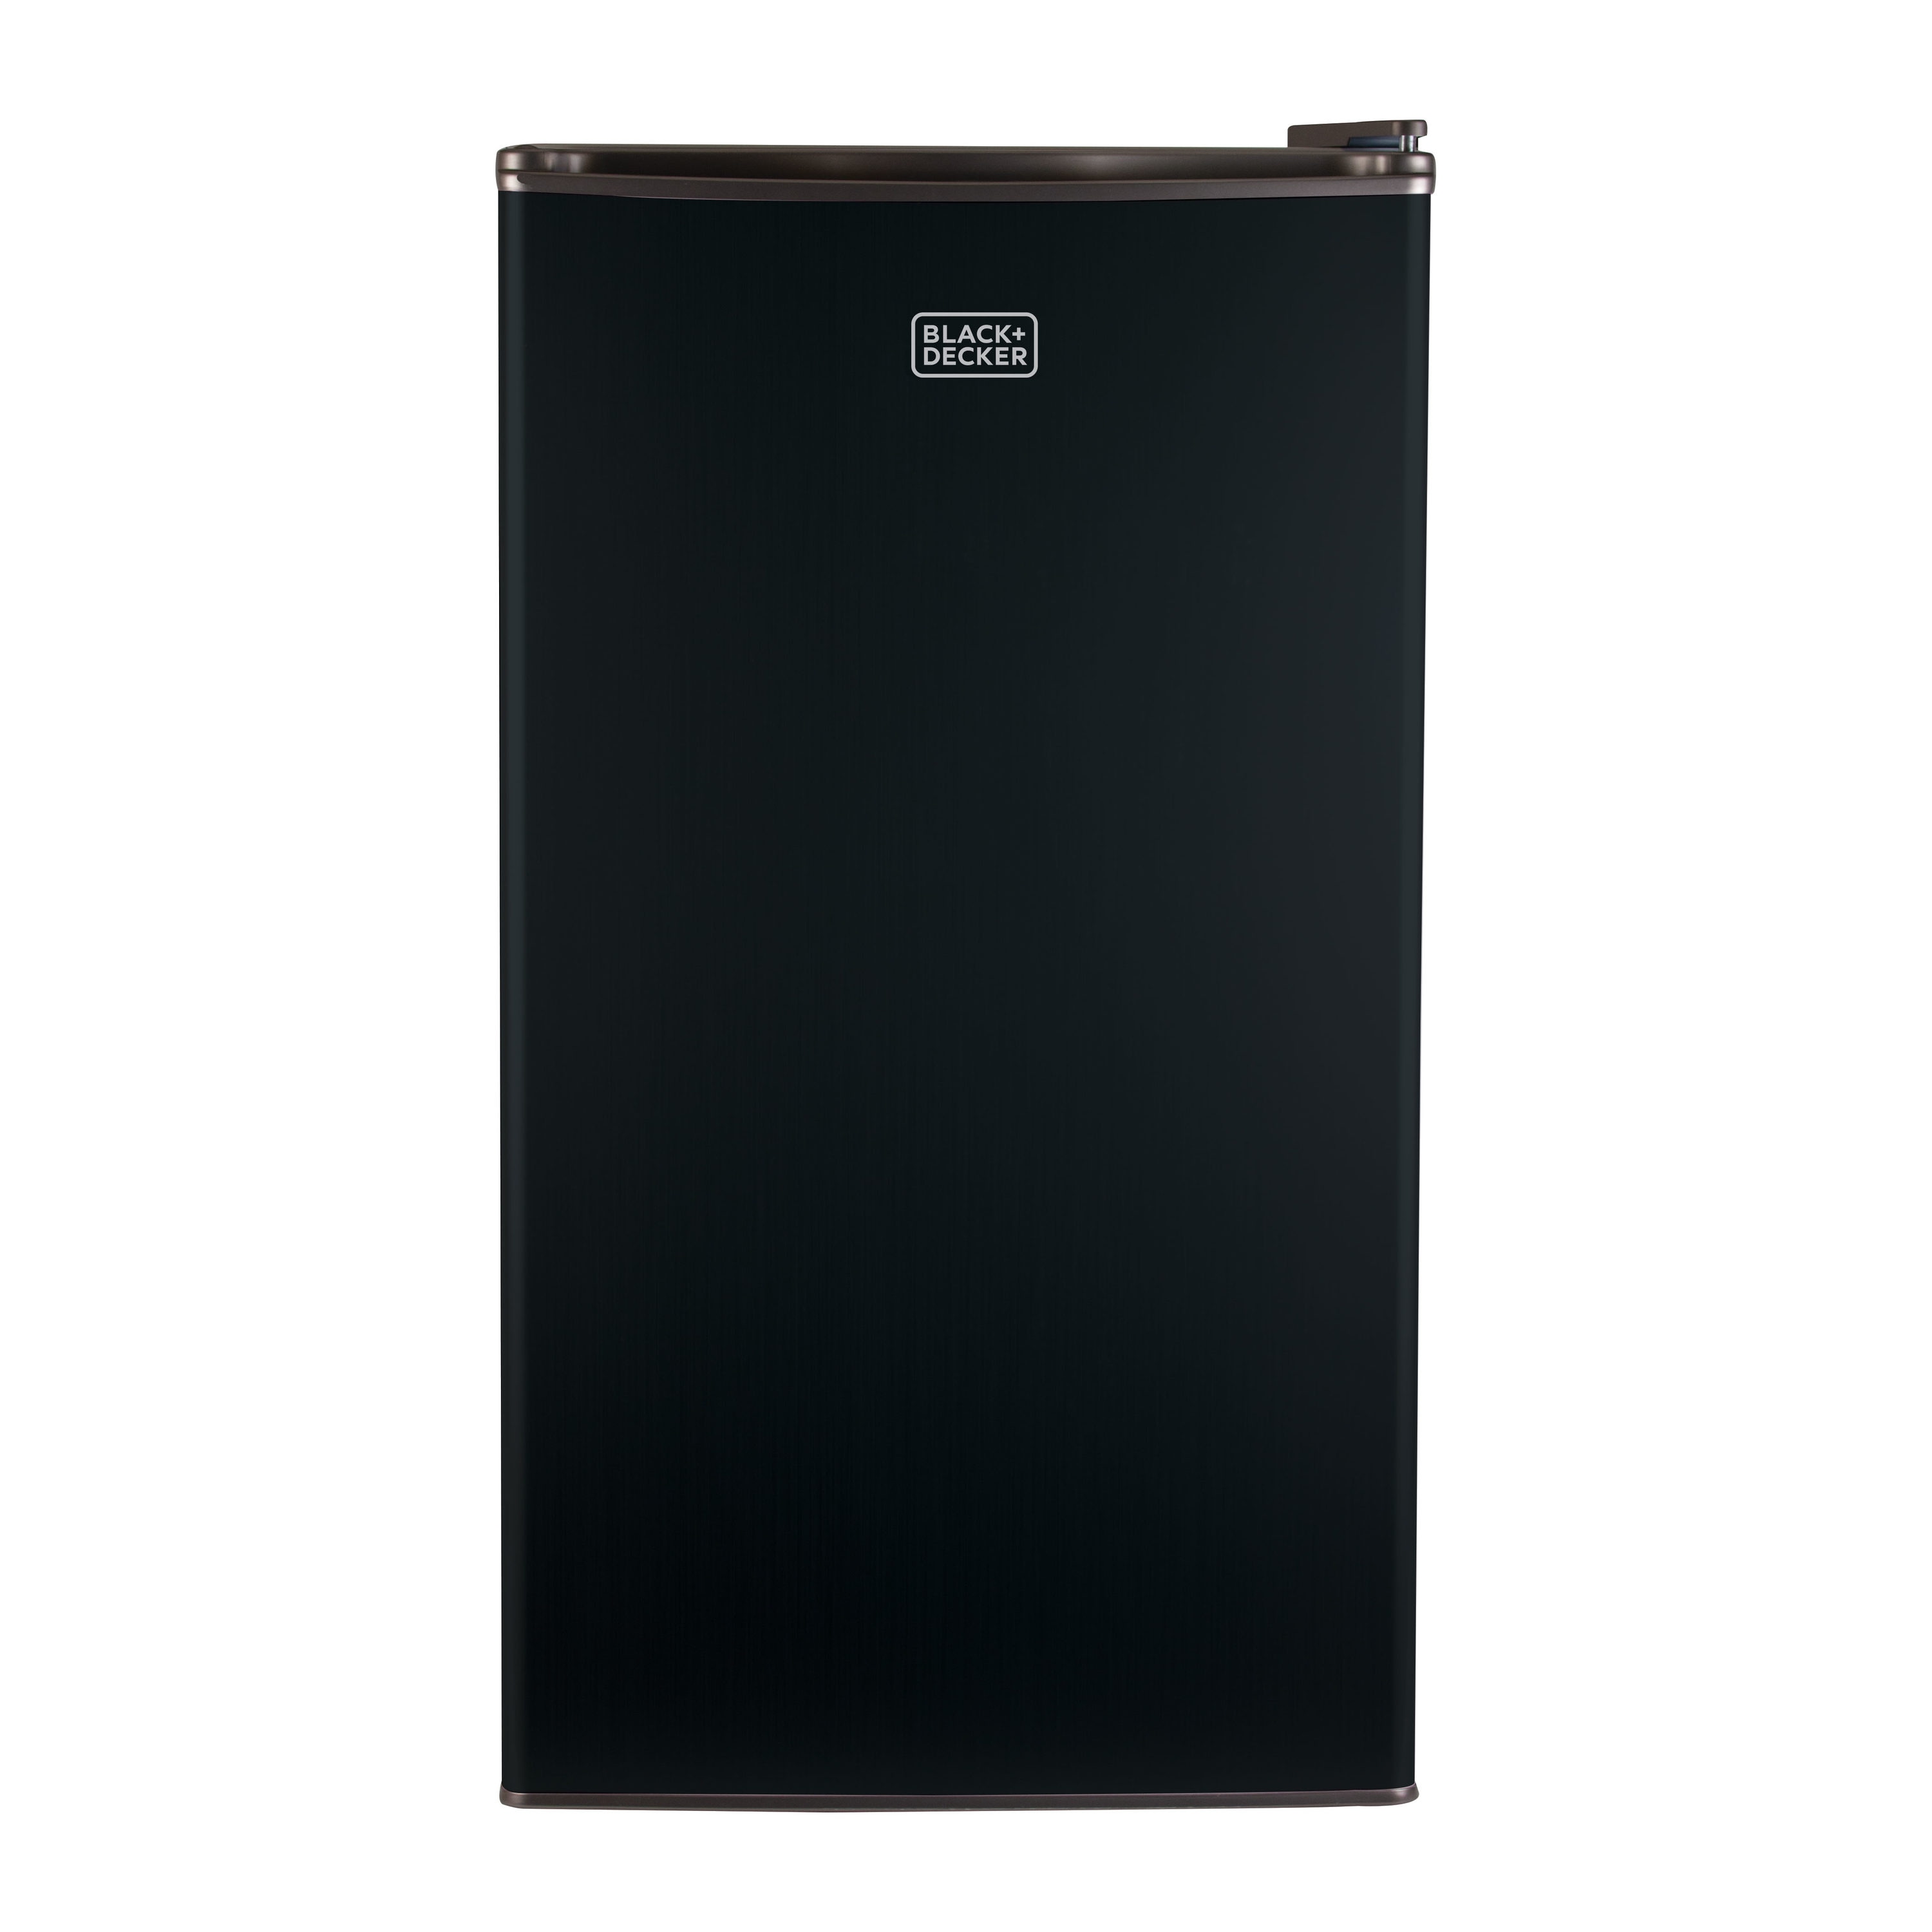 BLACK+DECKER Compact Refrigerator 3.2 Cu. Ft. with True Freezer, White